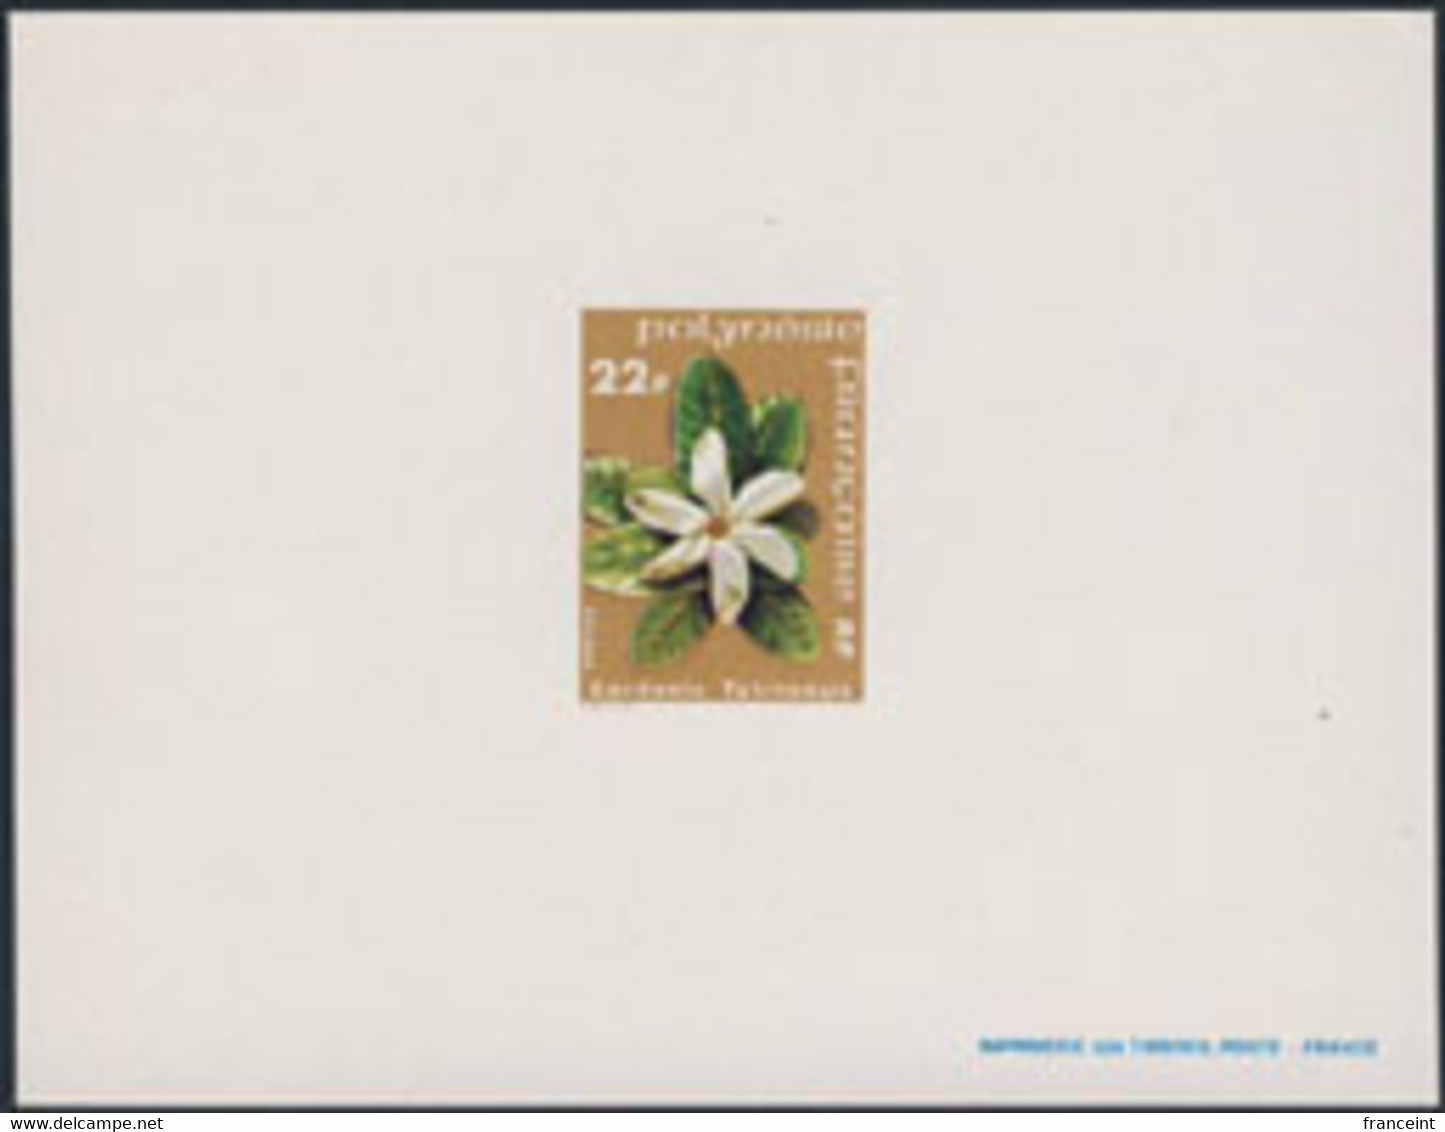 FRENCH POLYNESIA (1979) Tahitian Gardenia. Deluxe Sheet. Scott No 303, Yvert No 129. - Imperforates, Proofs & Errors